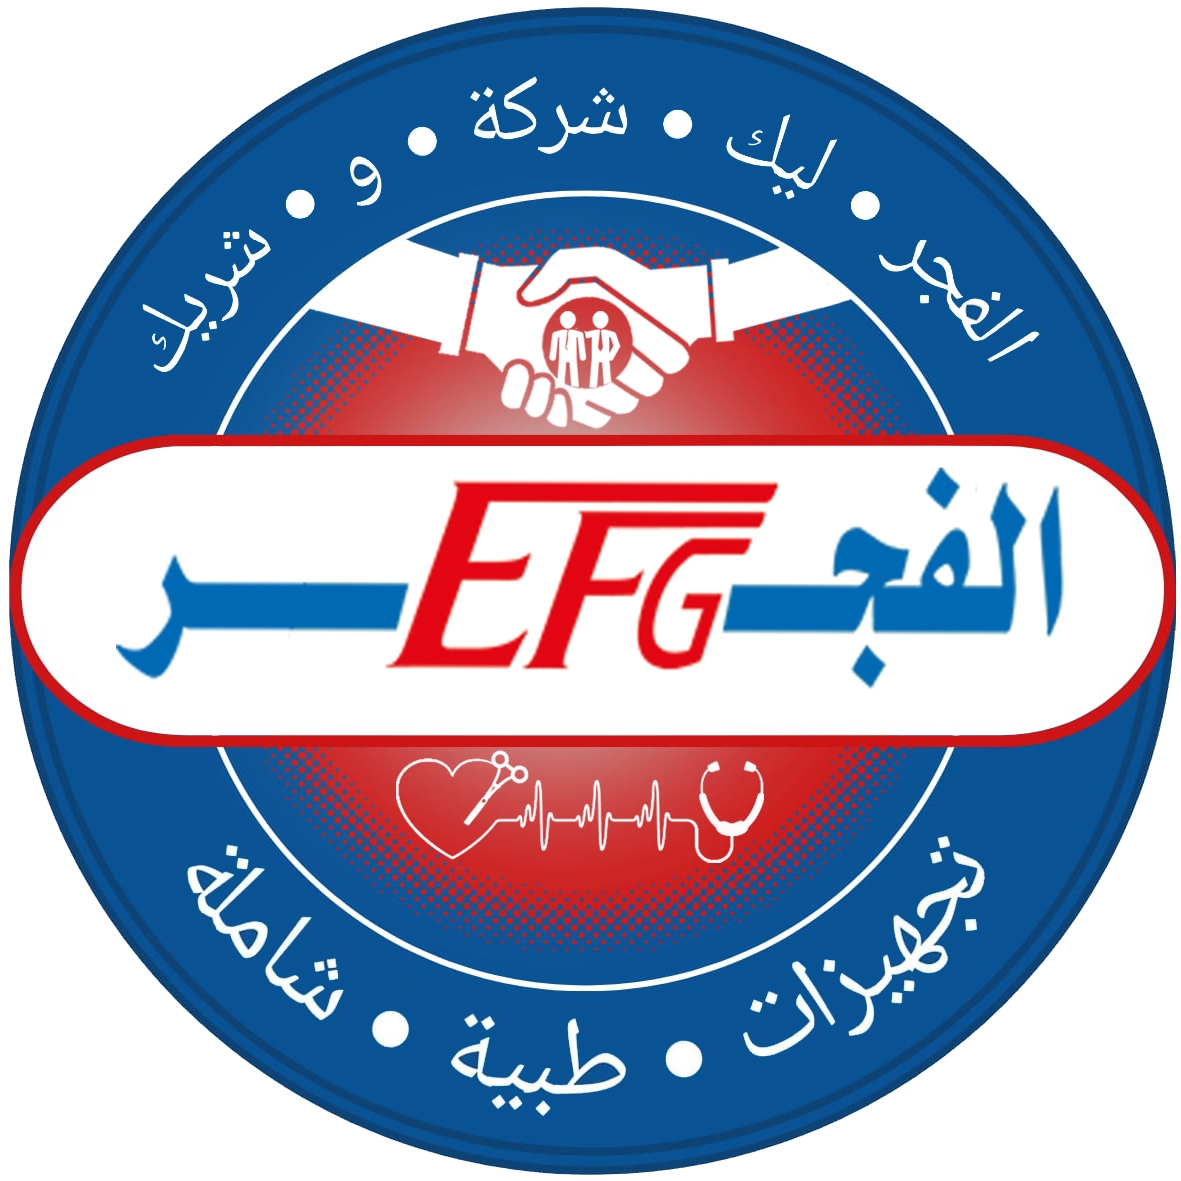 Business logo of elfagr for medical devices